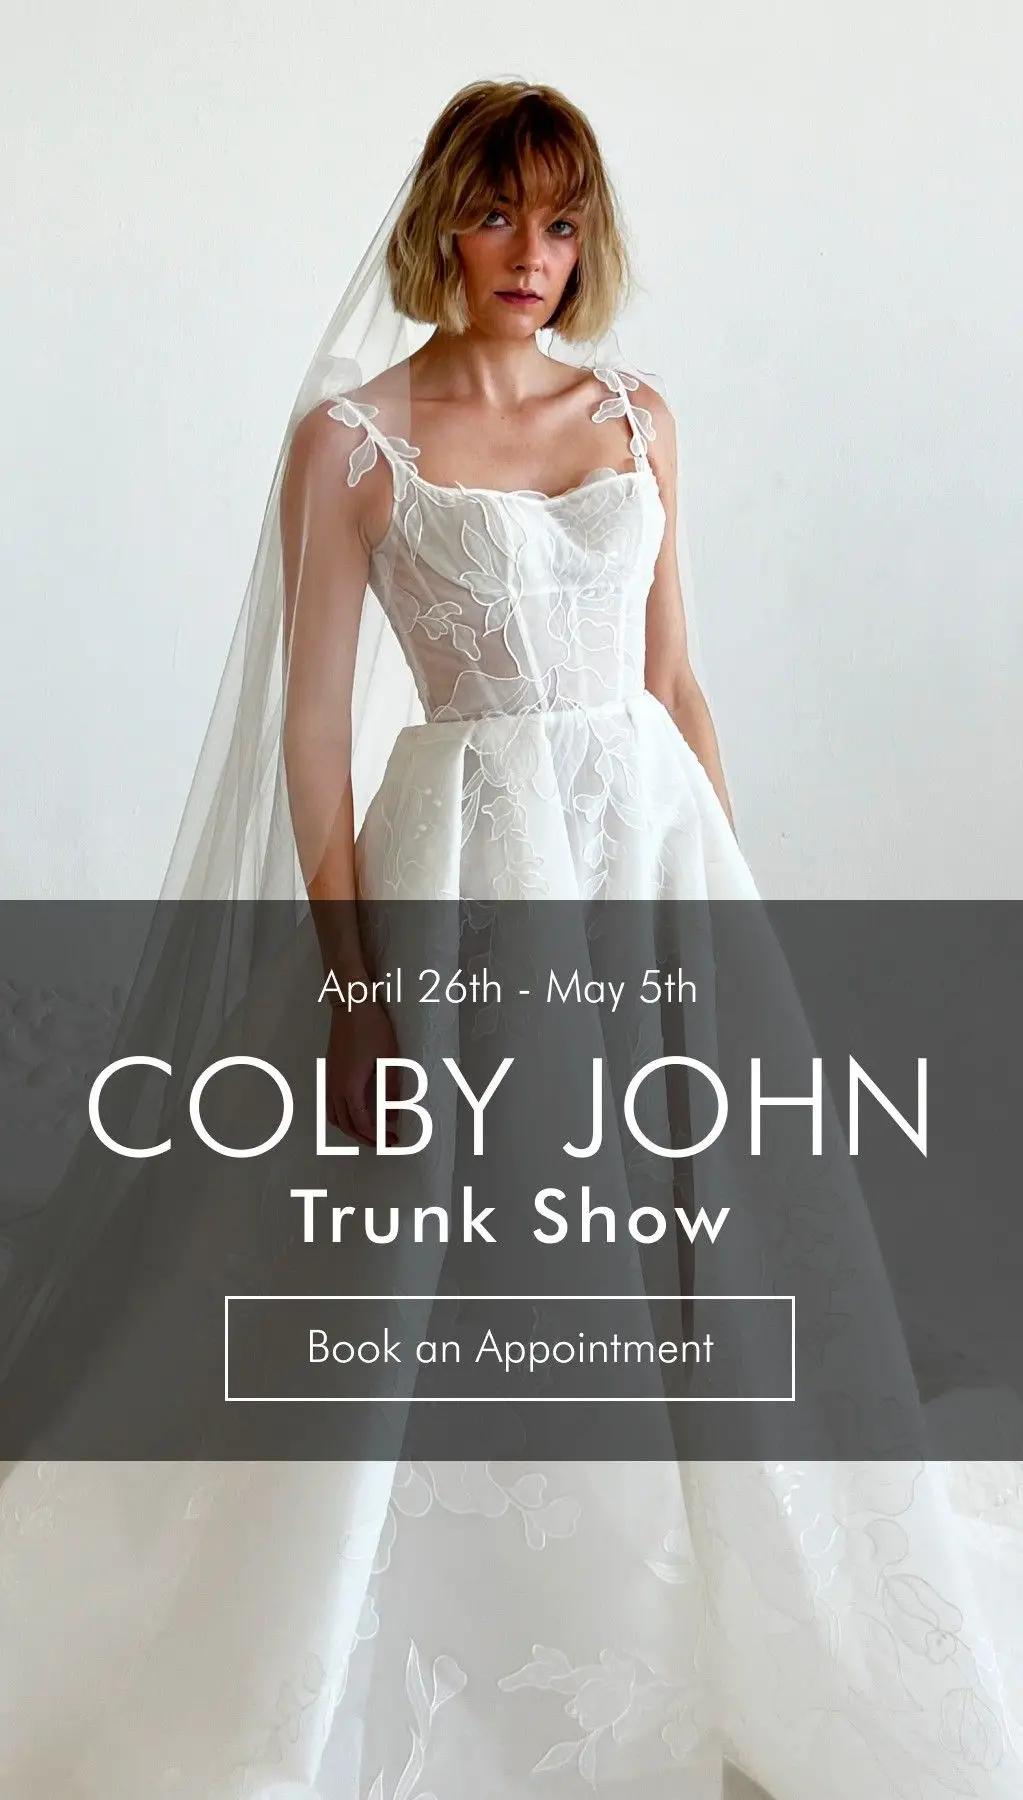 Colby John Trunk Show mobile banner